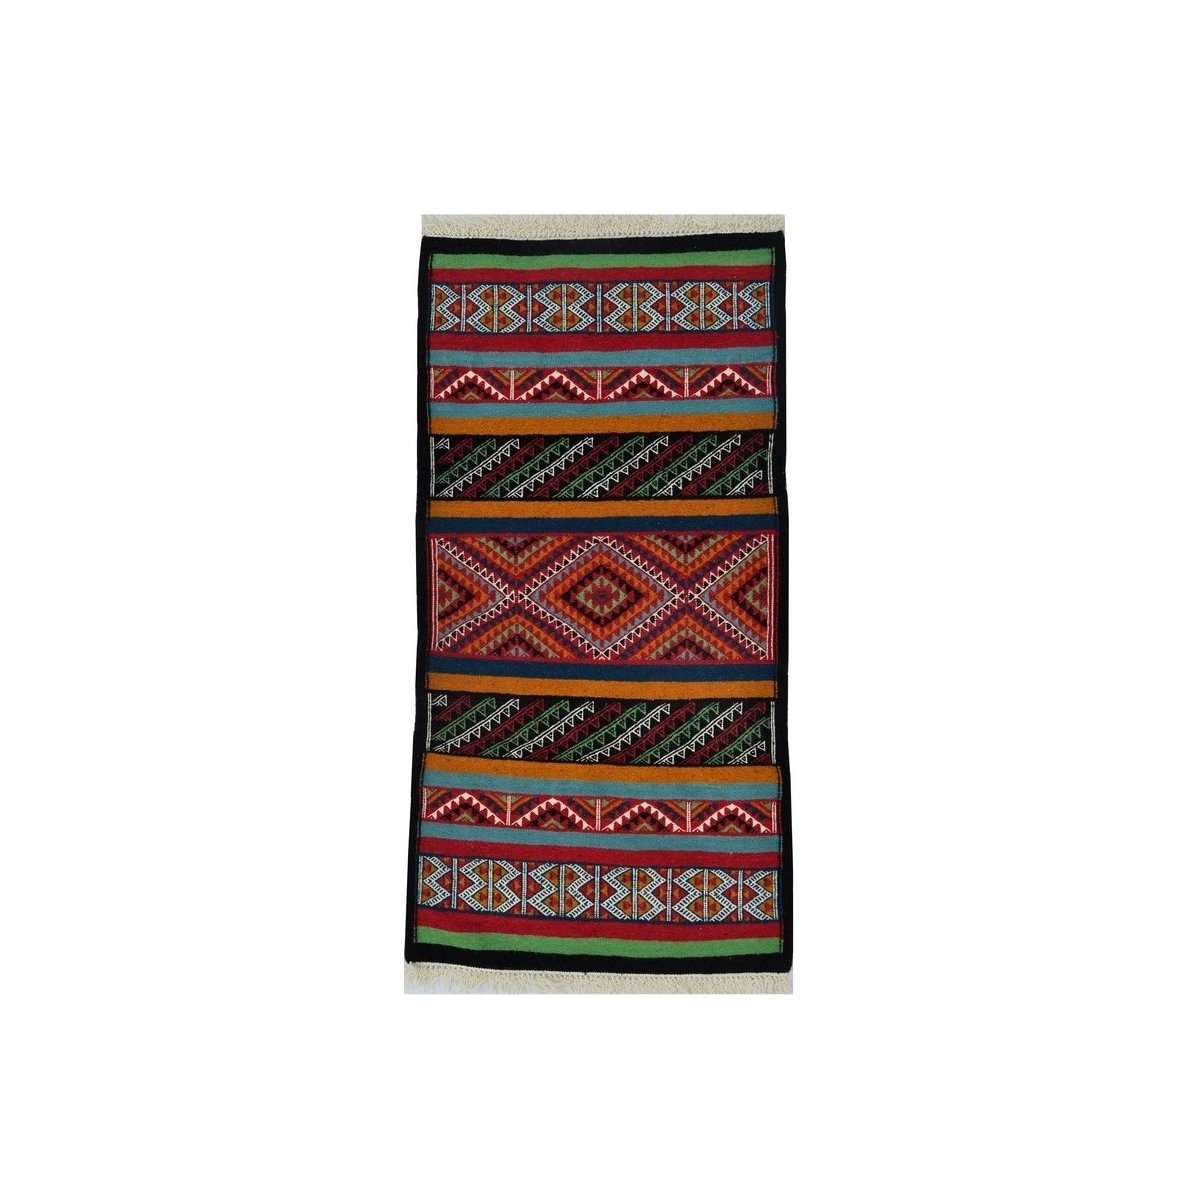 Tapete berbere Tapete Kilim Kef 60x110 Multicor (Tecidos à mão, Lã) Tapete tunisiano kilim, estilo marroquino. Tapete retangular